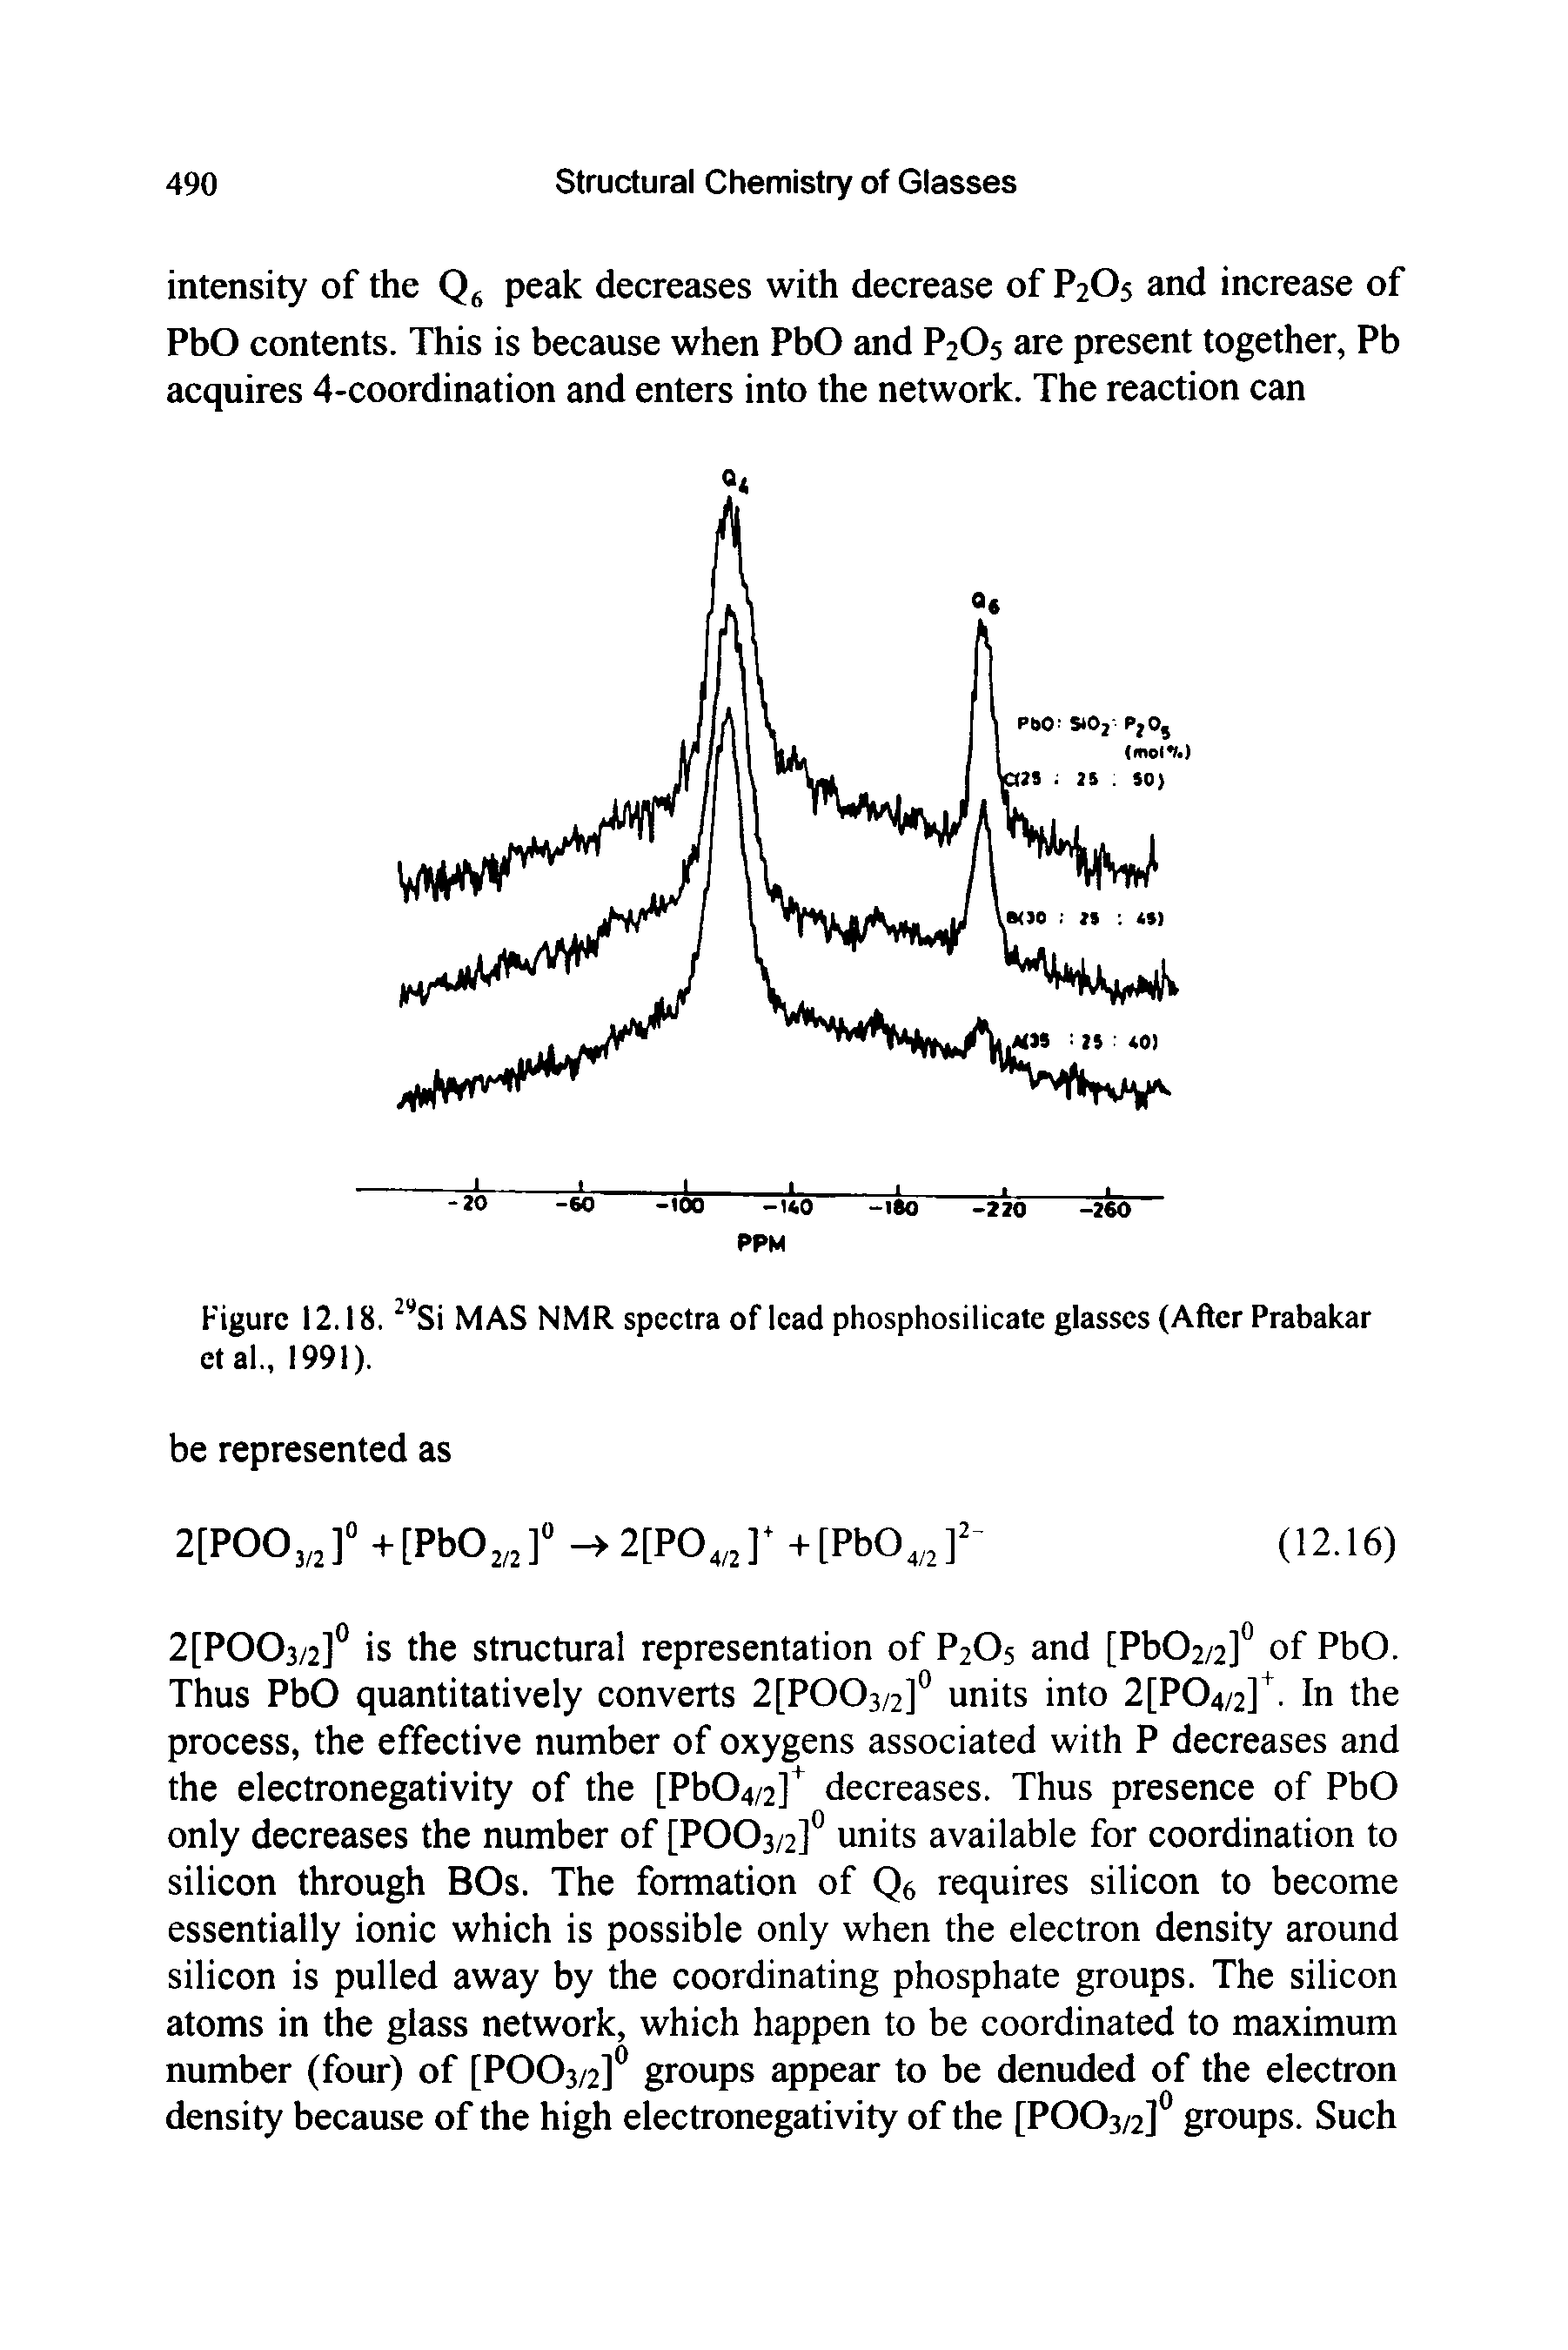 Figure 12.18. Si MAS NMR spectra of lead phosphosilicate glasses (After Prabakar etal., 1991).